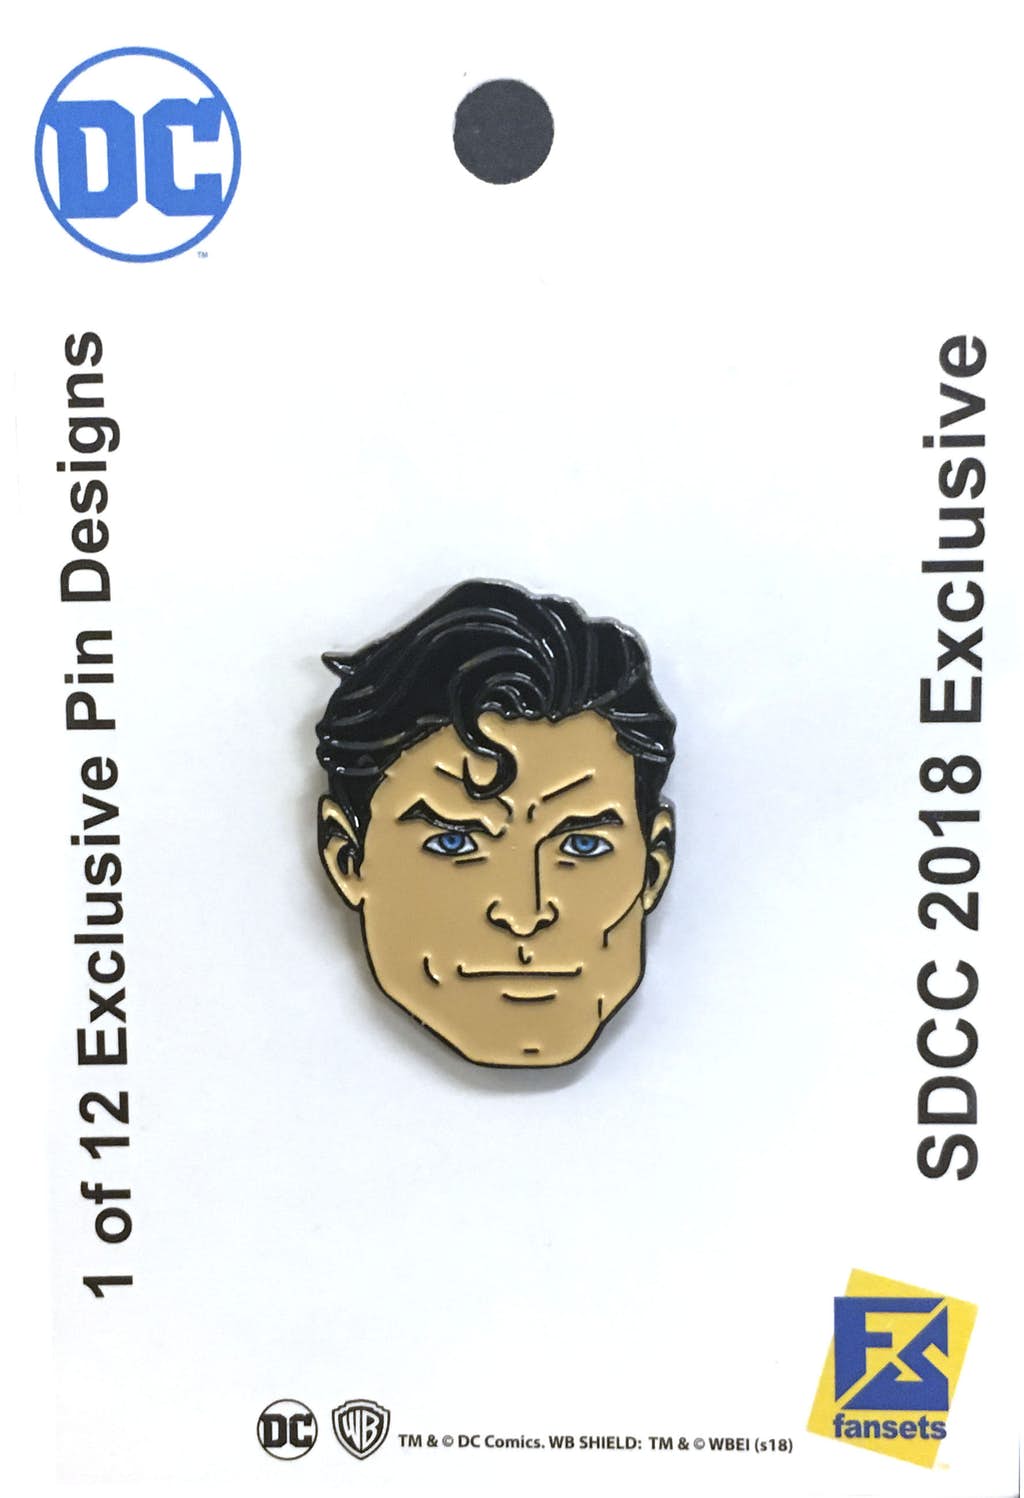 SDCC Exclusive Warner Brothers DC Comics Superman Pin 